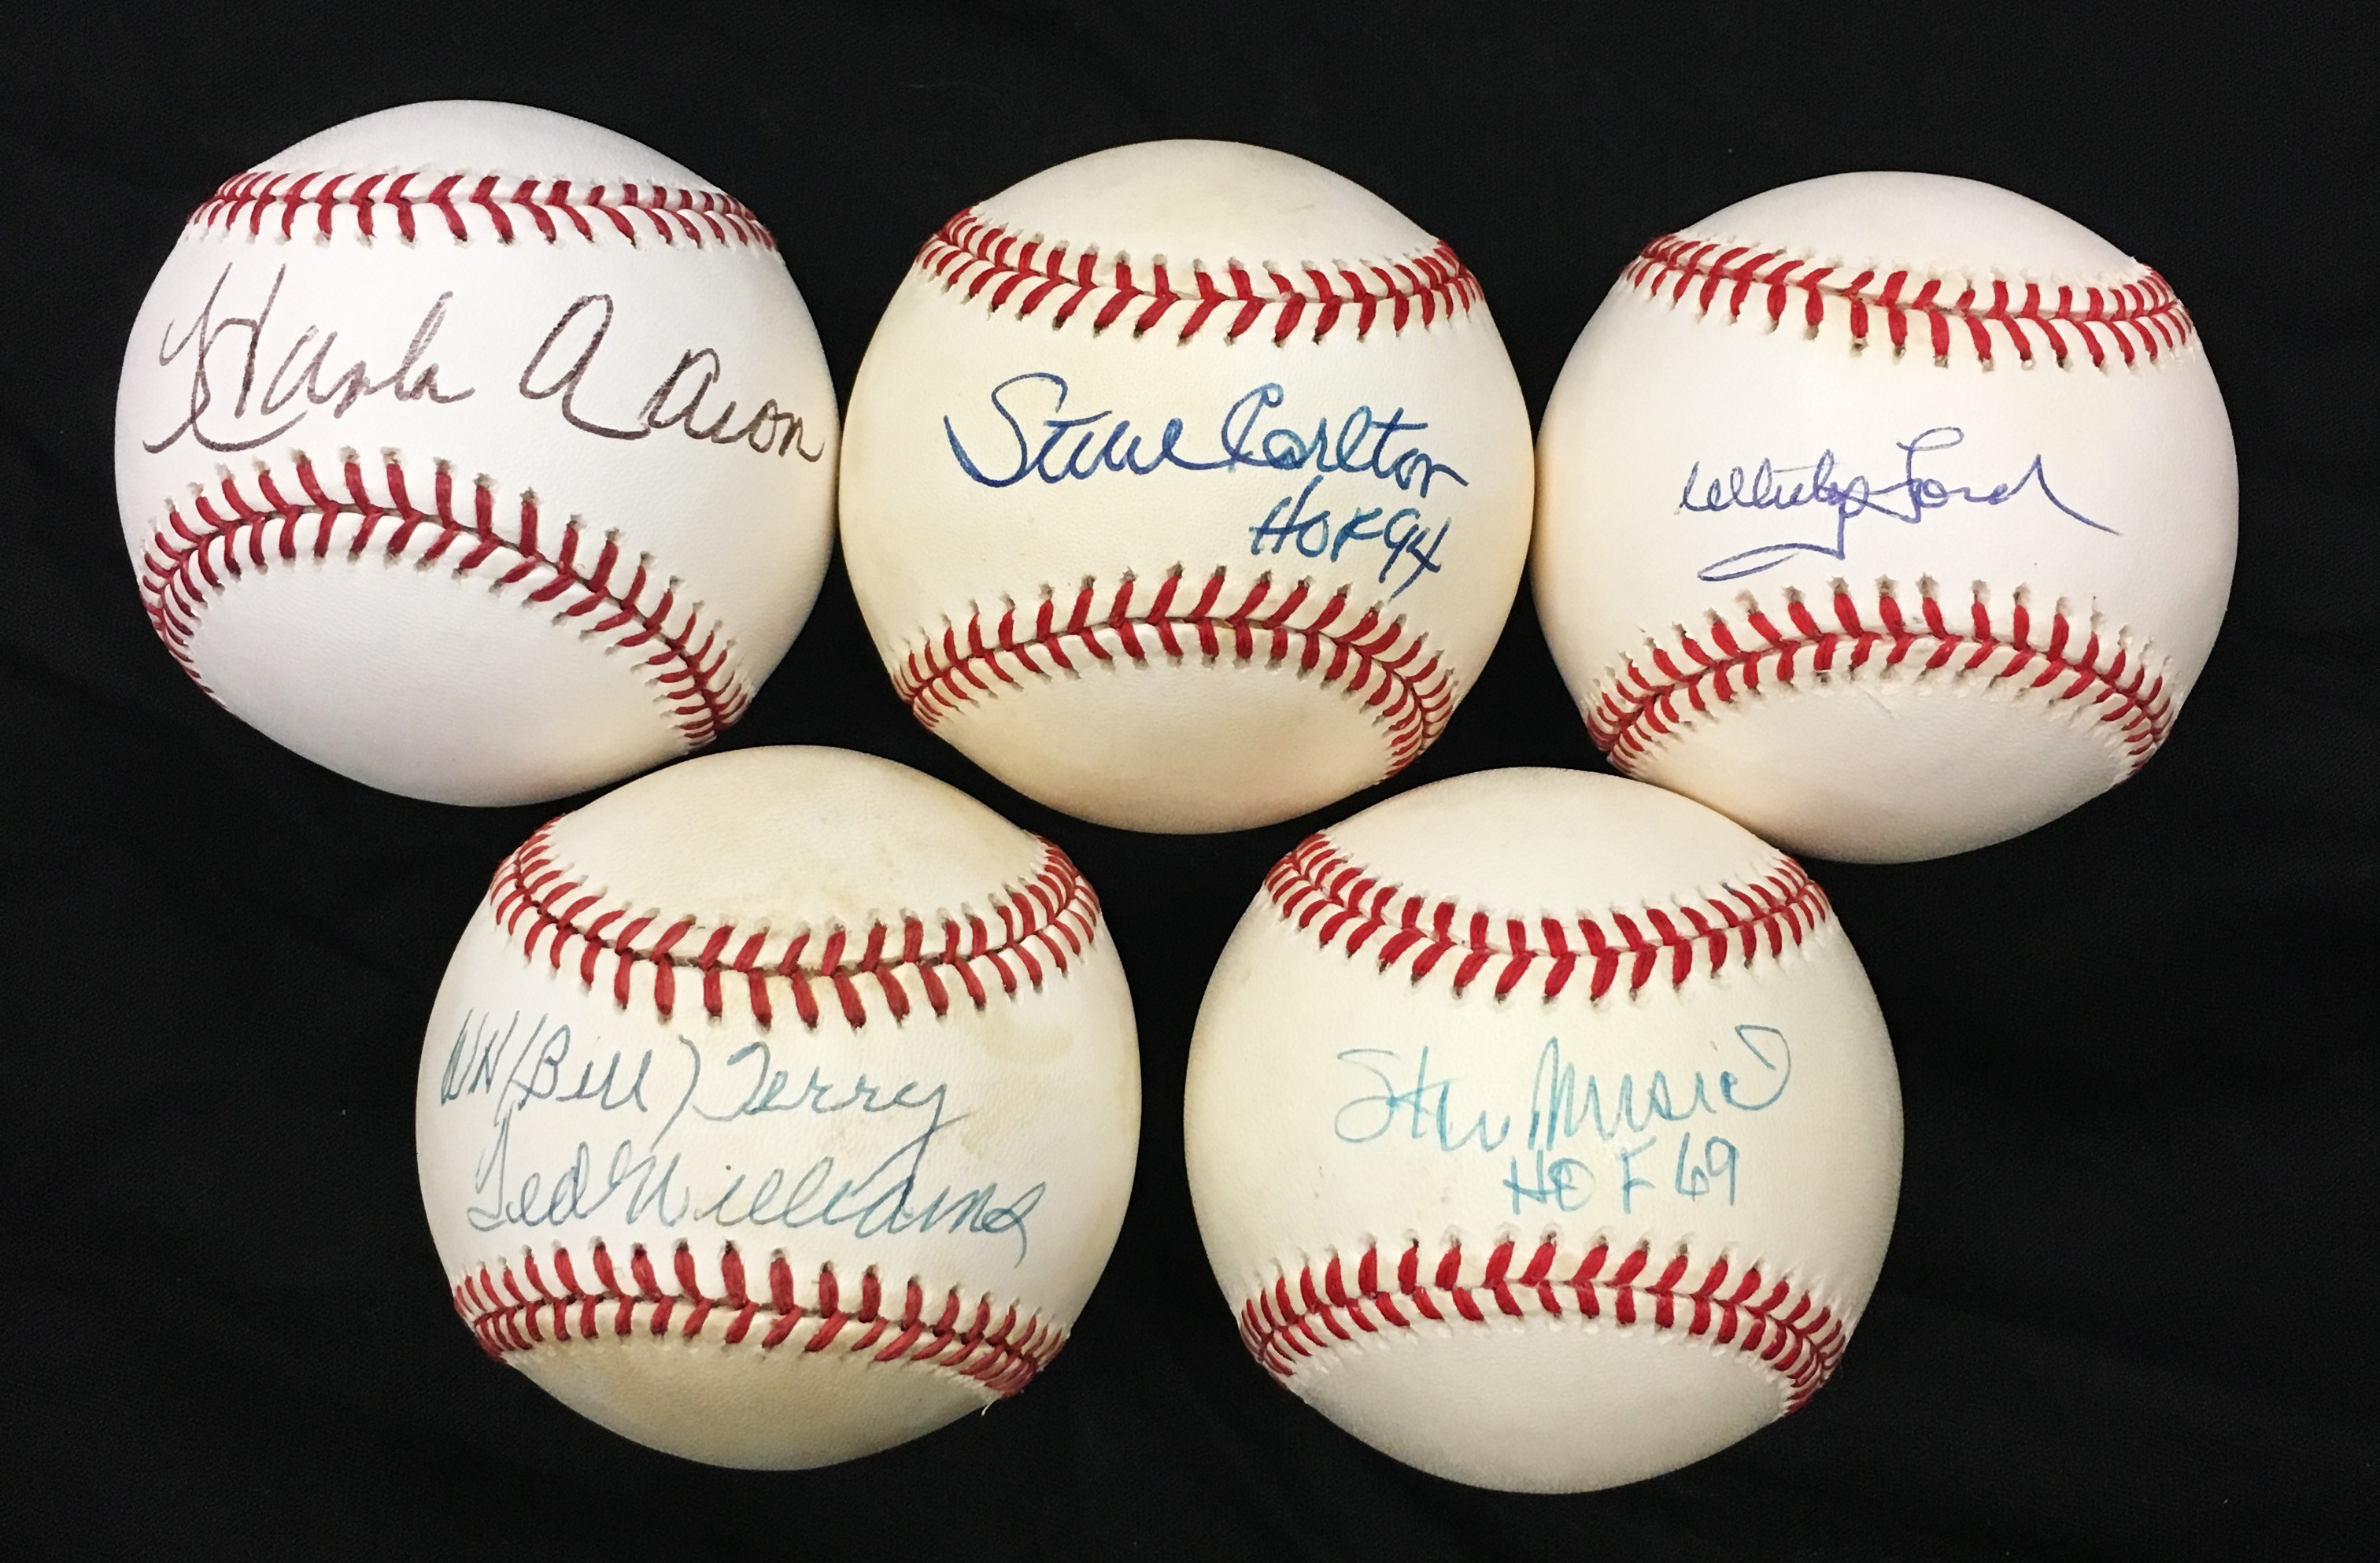 Baseball Autographs - Hall of Fame Legends Signed Baseballs w/Ted Williams (5)